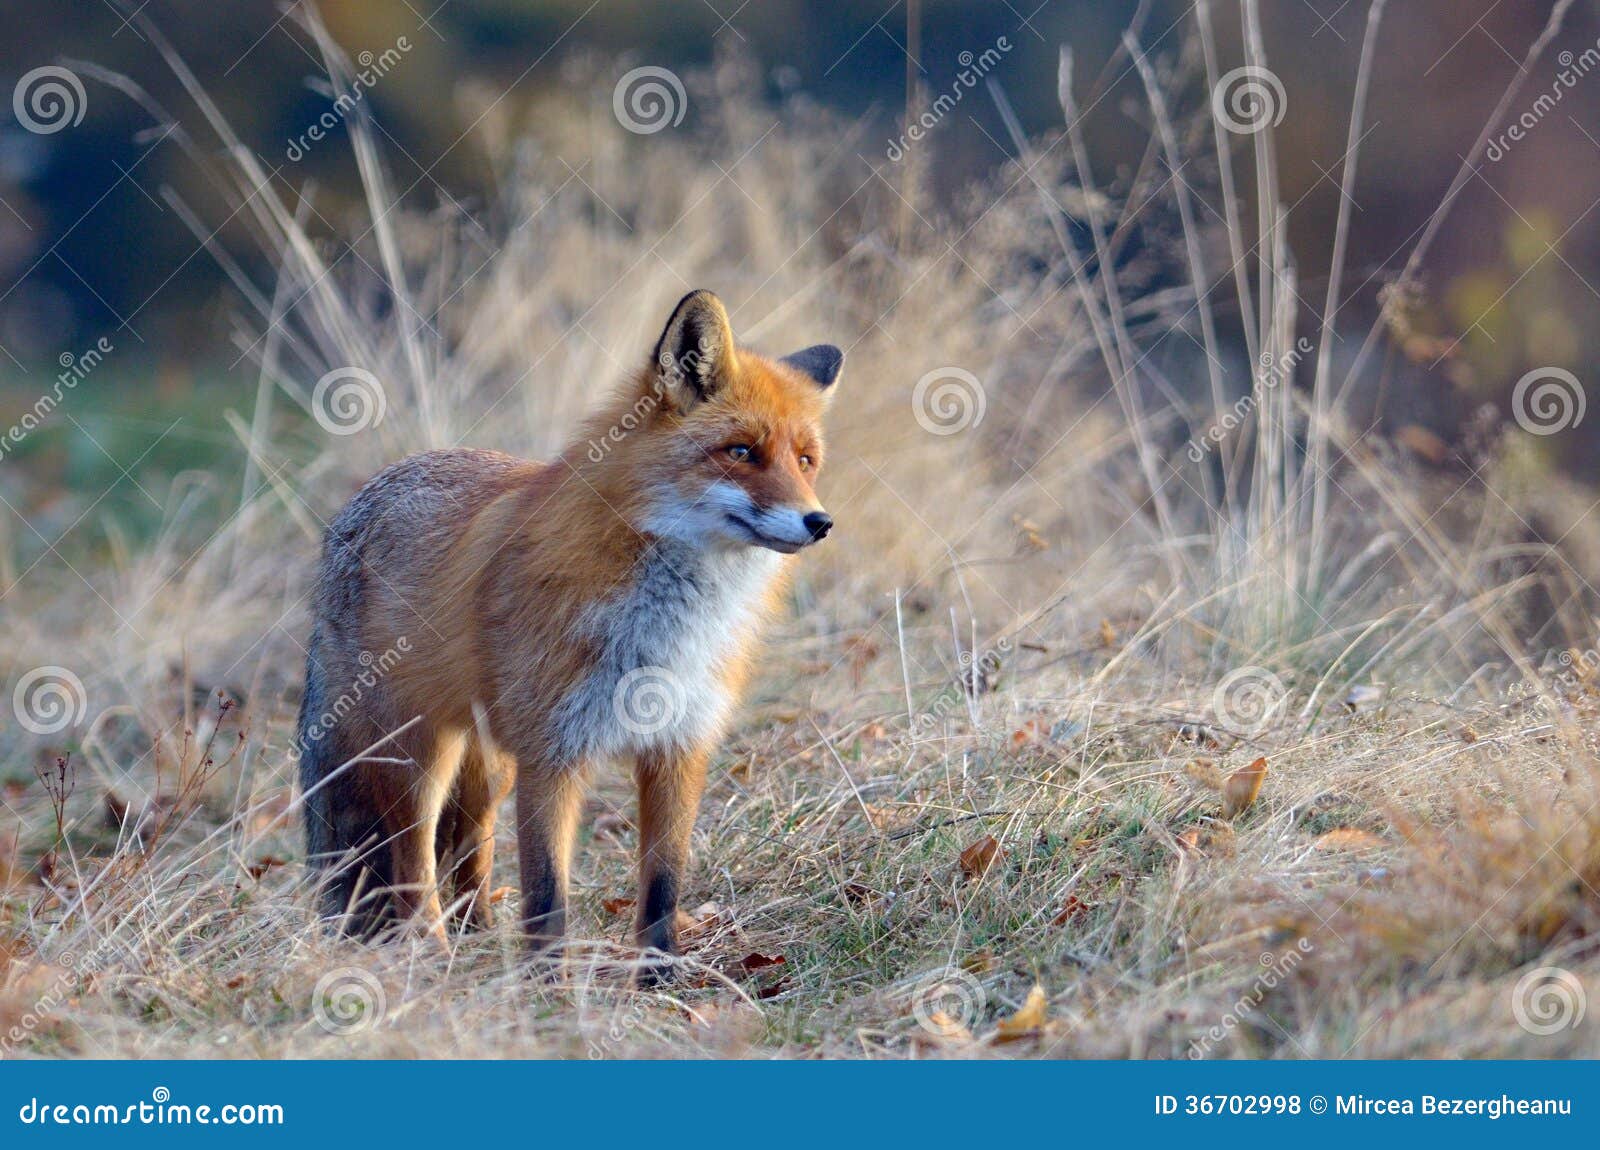 fox in the wildlife